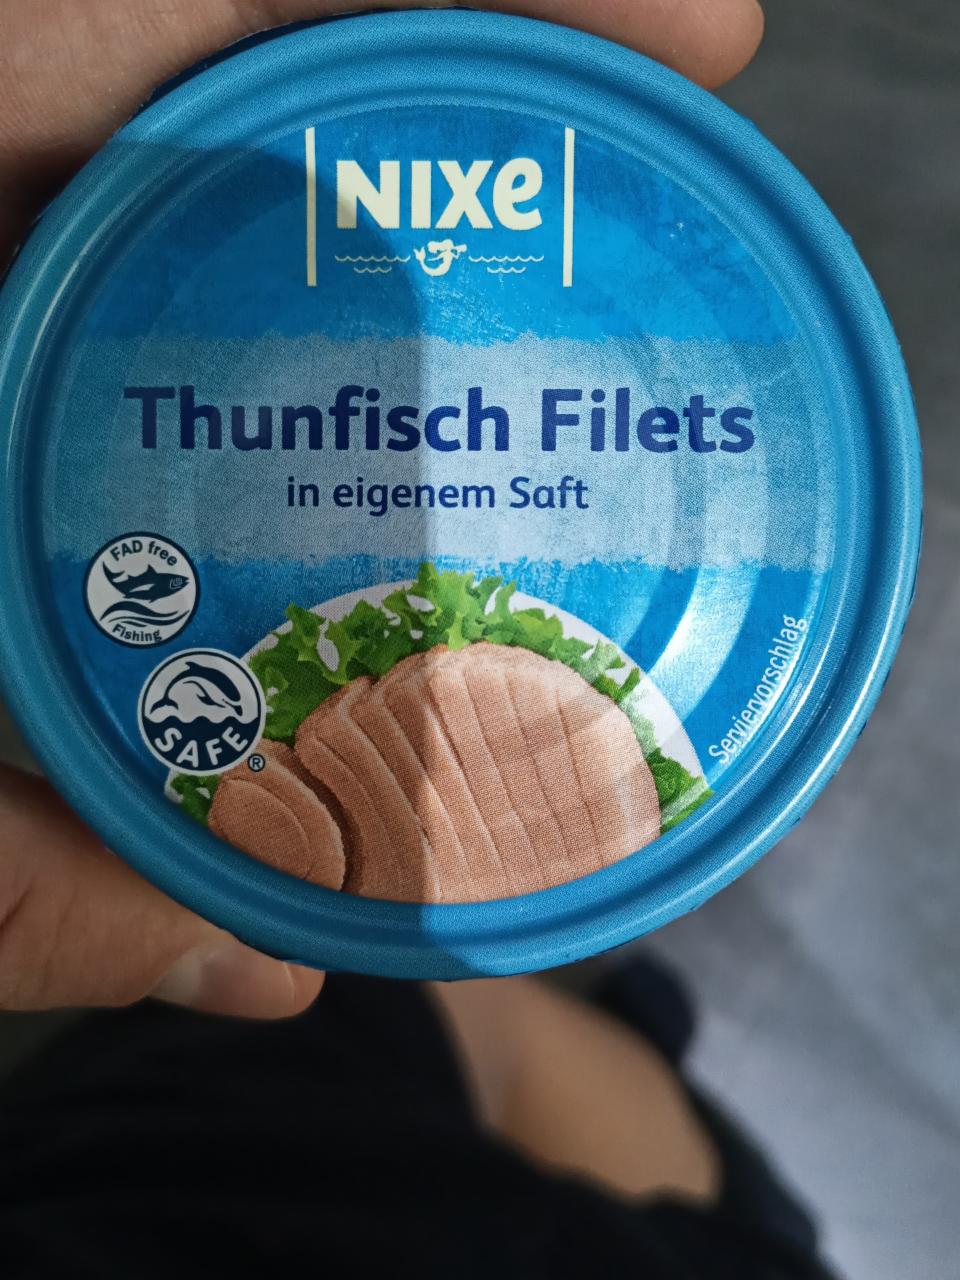 Zdjęcia - thunfisch Filets Nixe